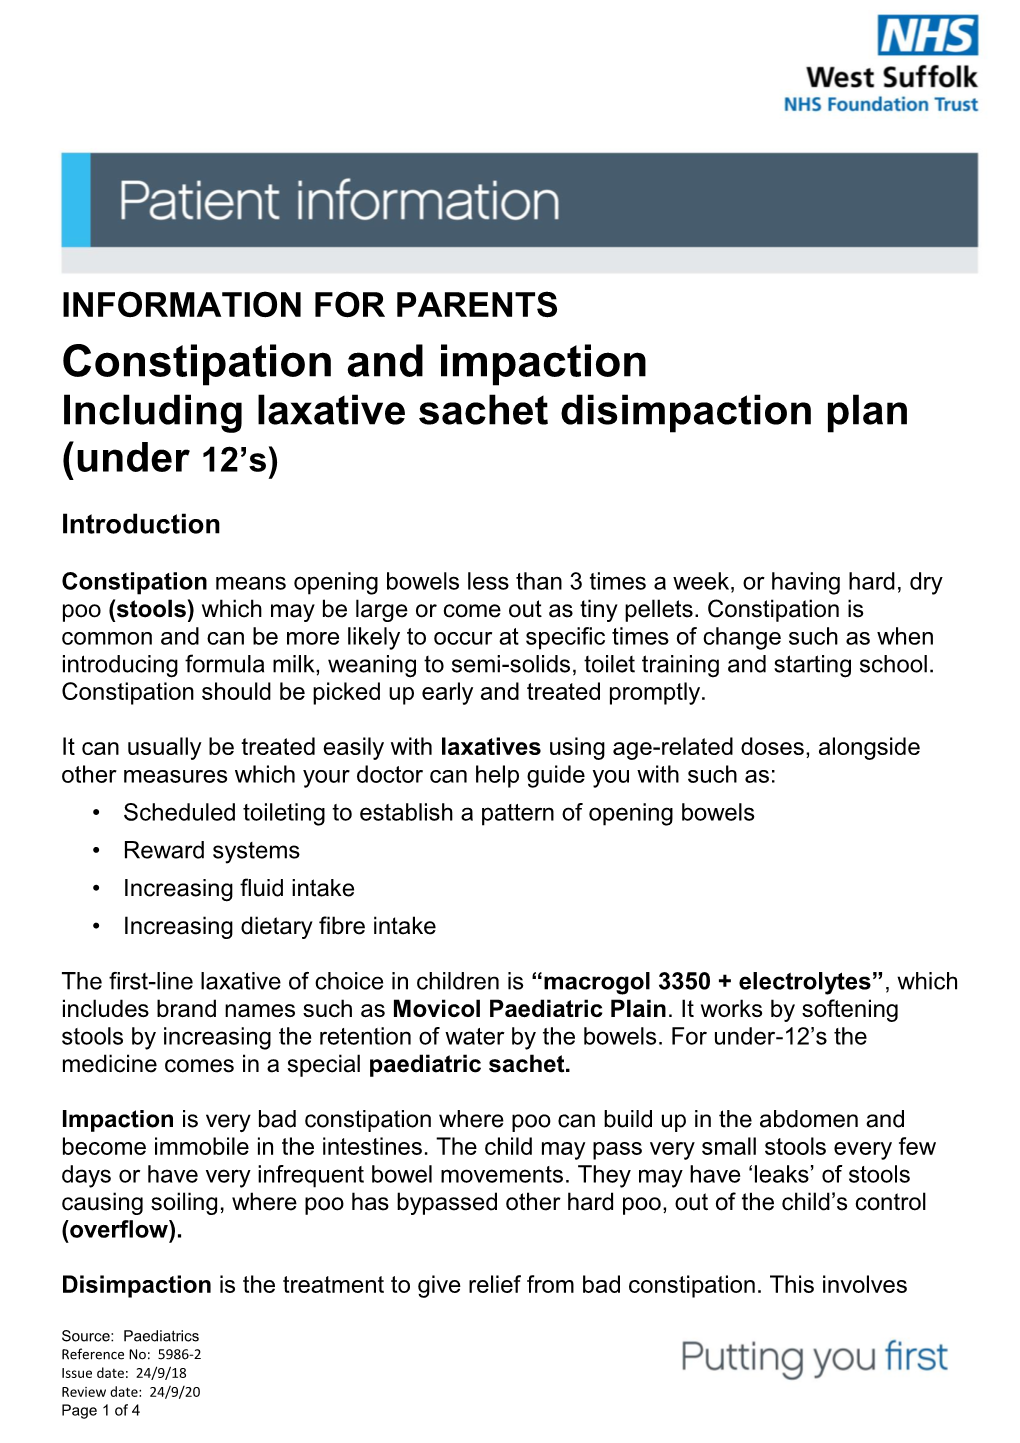 Including Laxative Sachet Disimpaction Plan (Under 12’S)